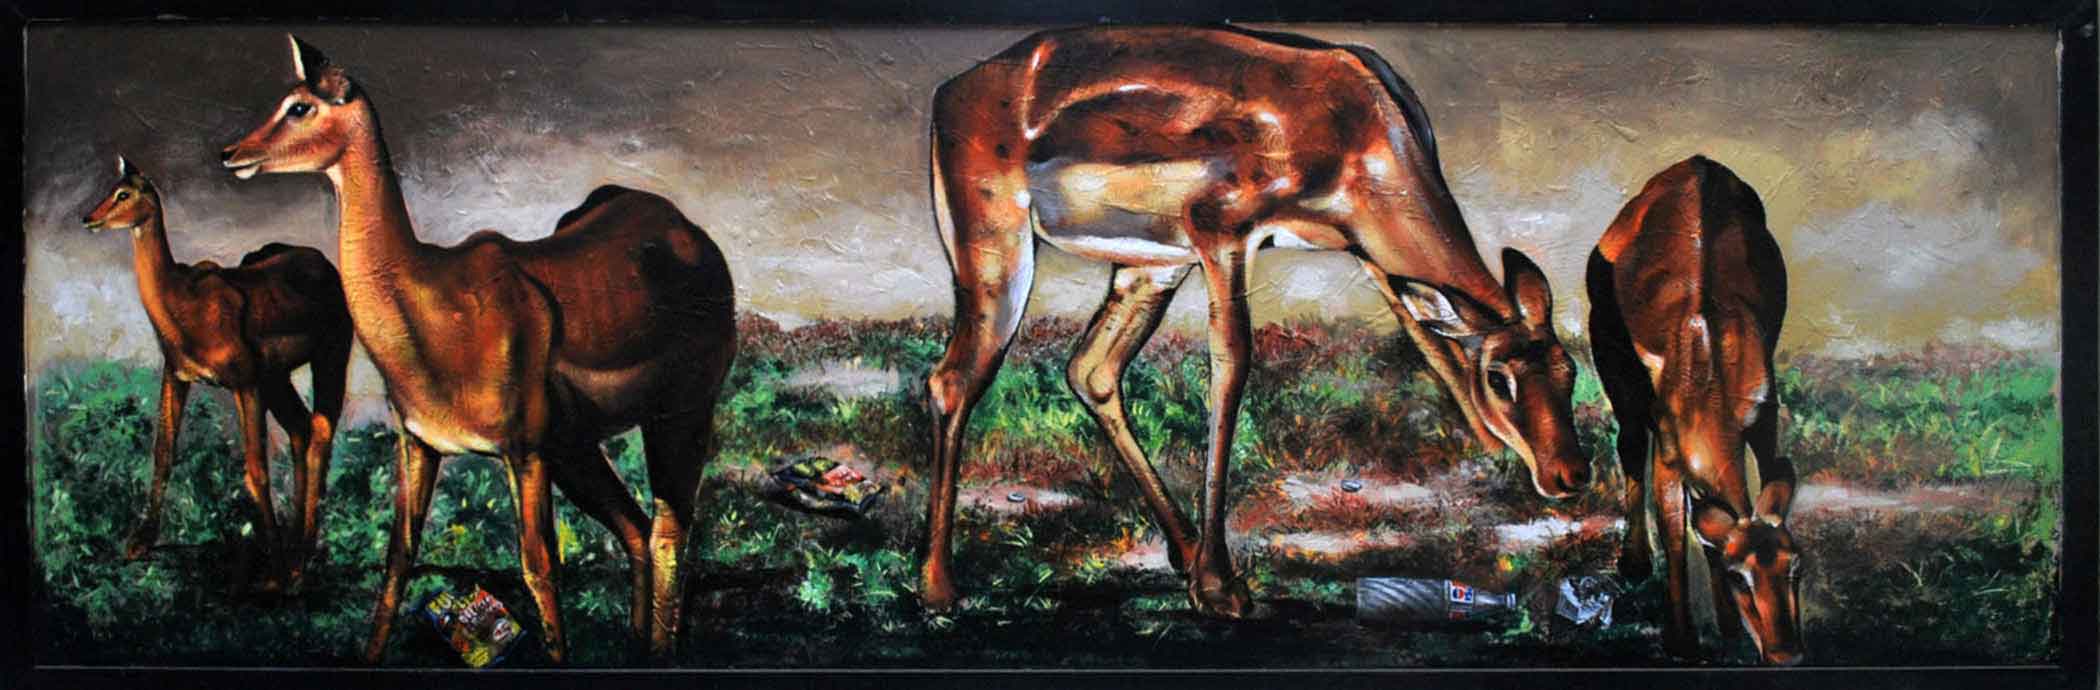 Realism Painting with Acrylic on Canvas "Untitled" art by Ganga Maharana